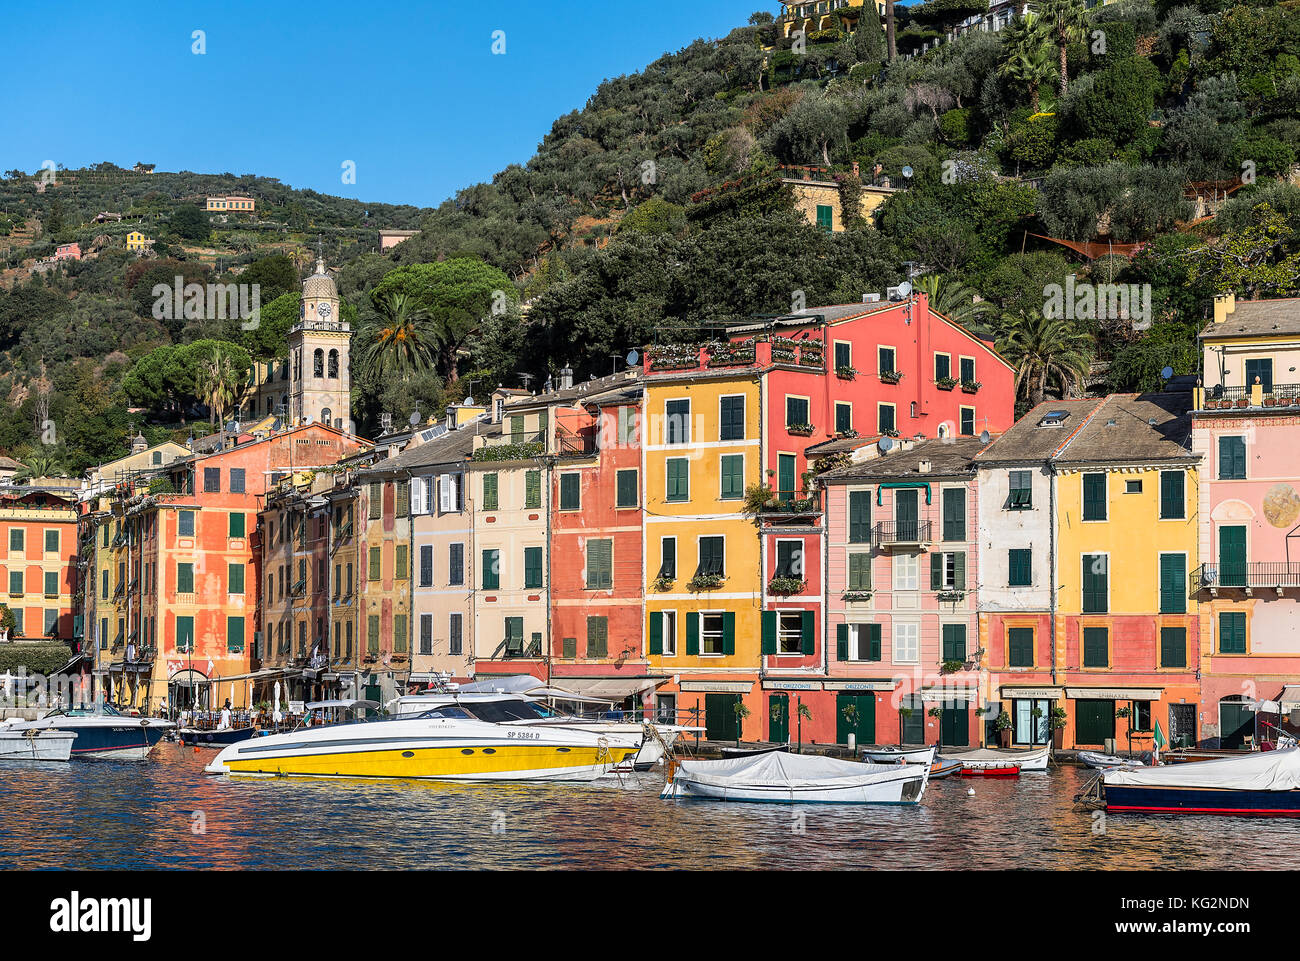 Picturesque harbor and village of Portofino, Liguria, Italy. Stock Photo